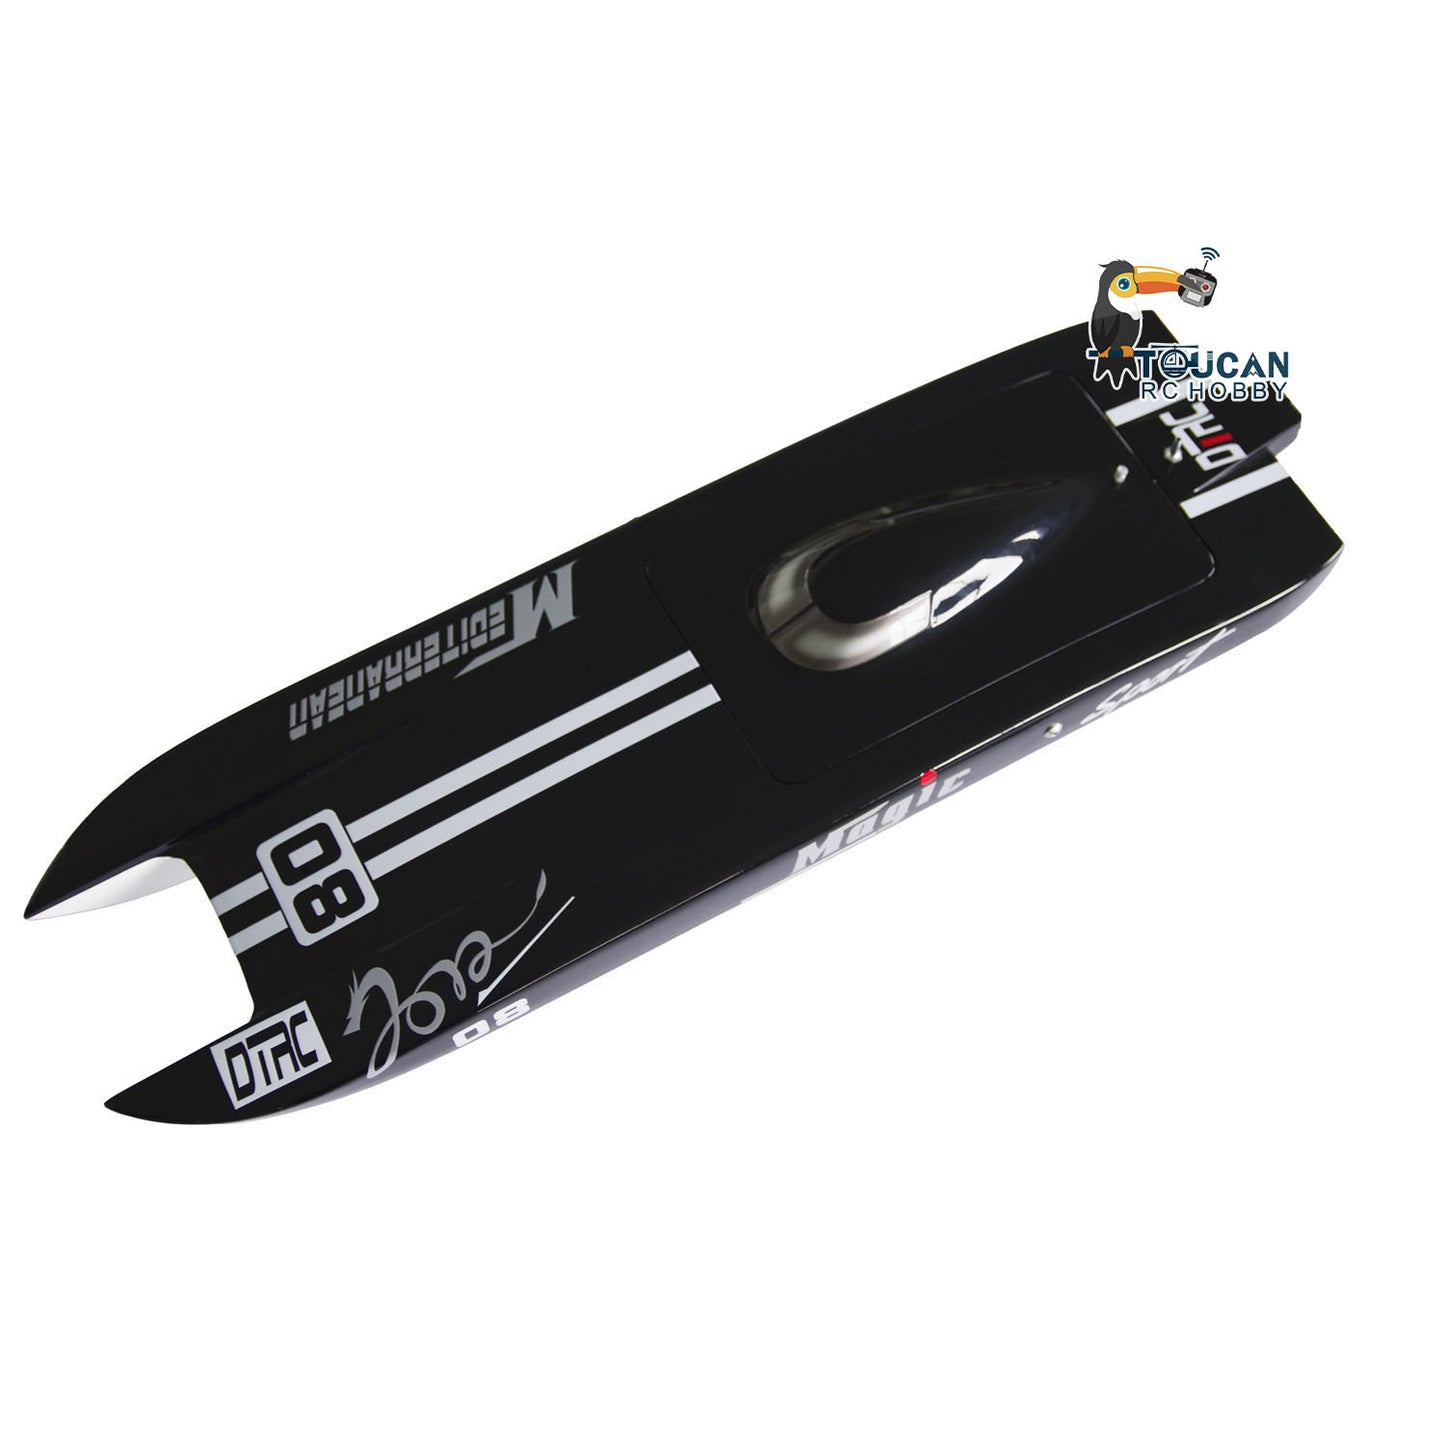 E32 Prepainted Fiber Glass Catamaran Electric Racing KIT RC Boat Hull for Advanced Player DIY Model Adult Toy Gift 785*235*115mm